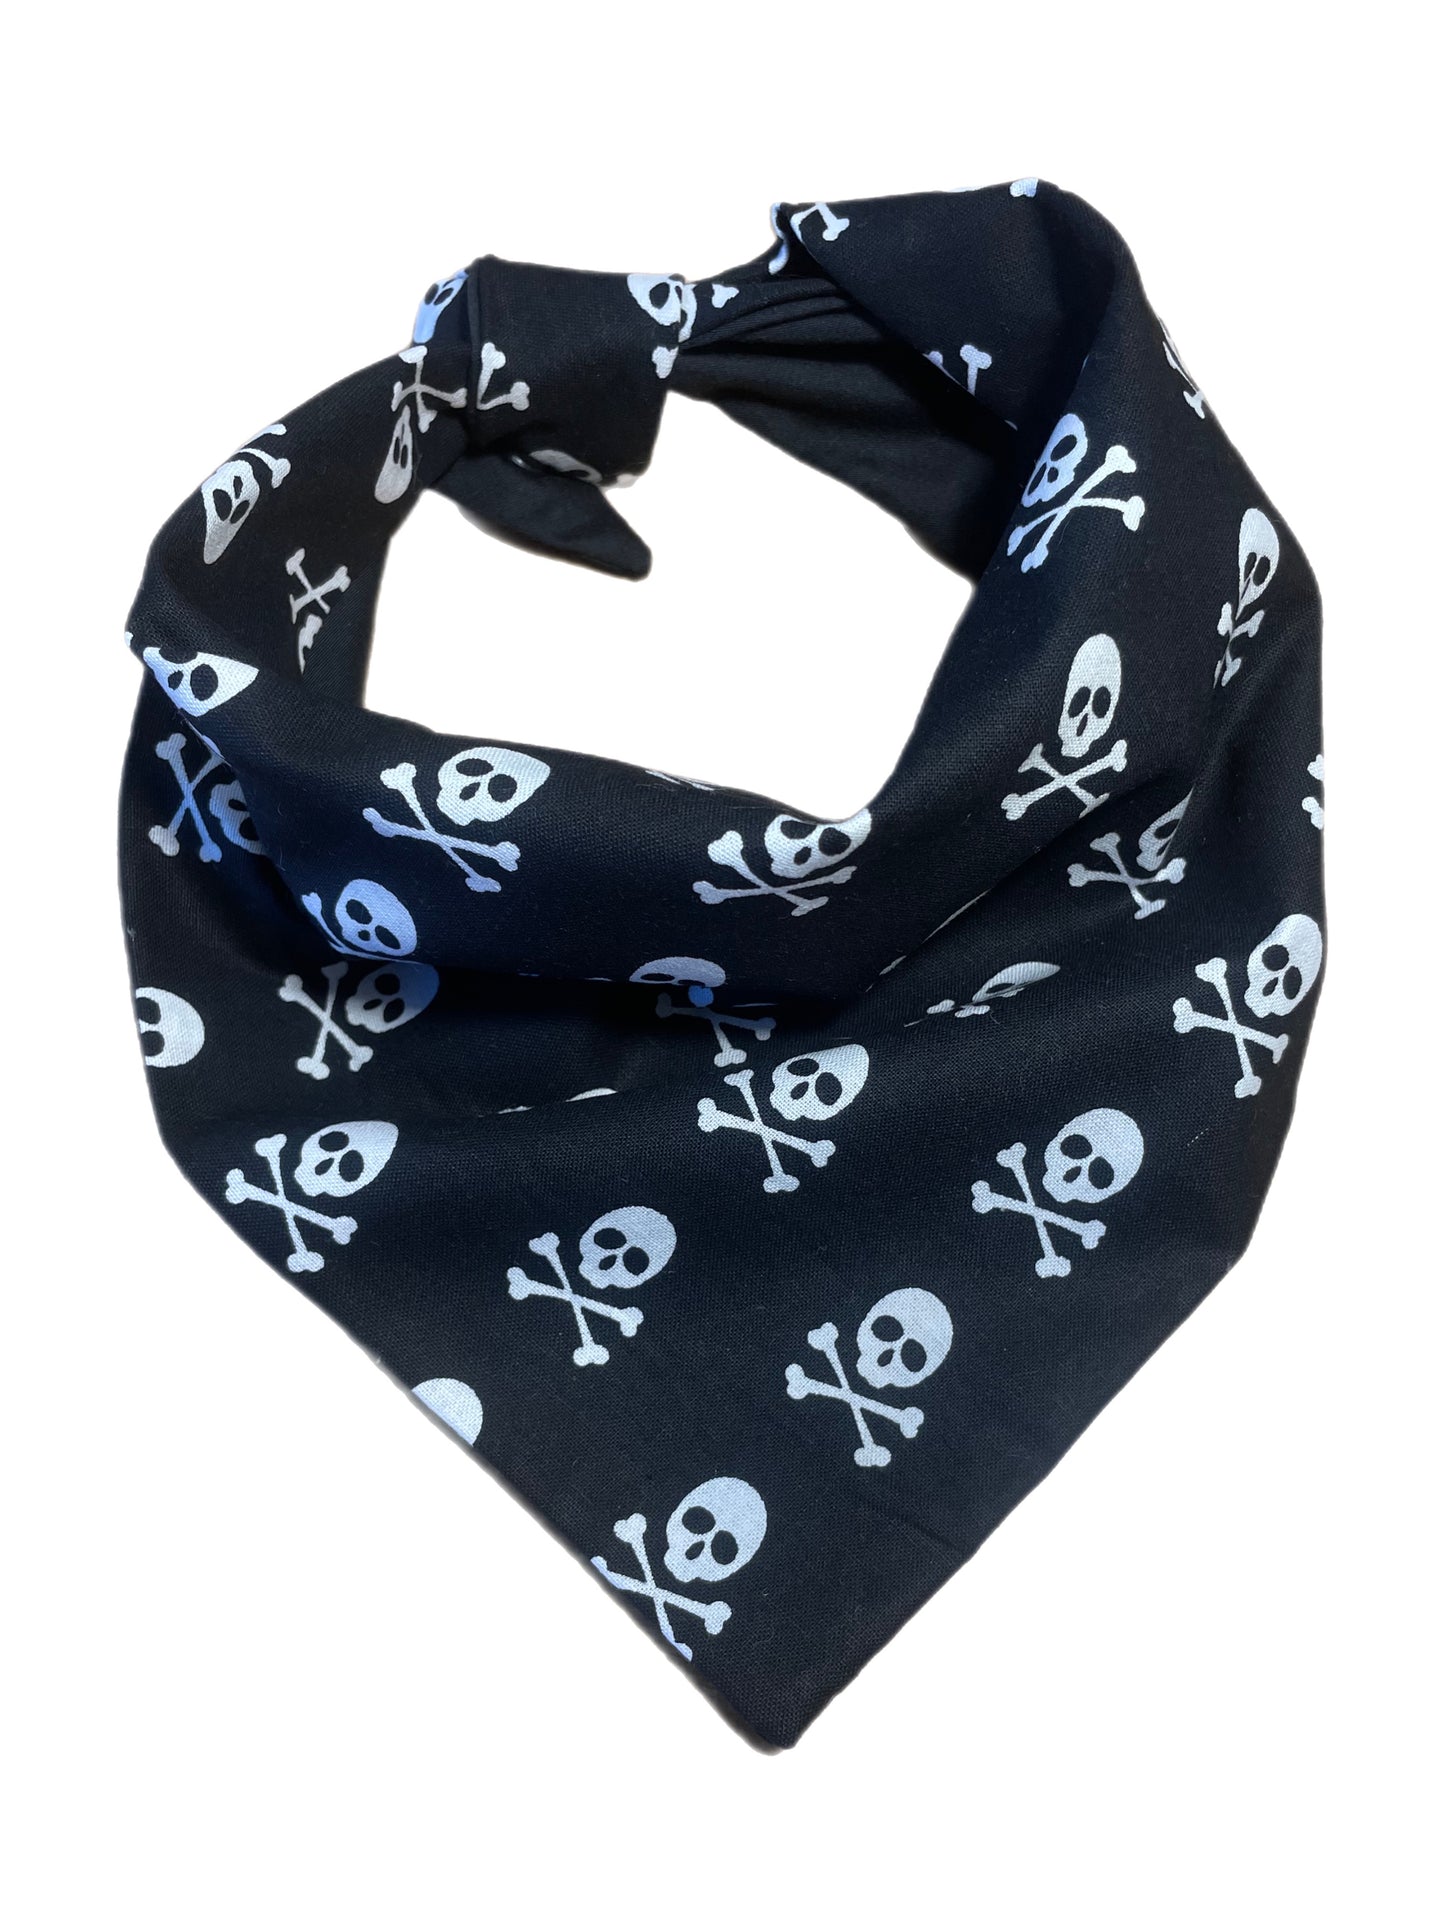 Black & white pirate skull & crossbones greyhound Martingale collar cotton covered 50mm width super soft